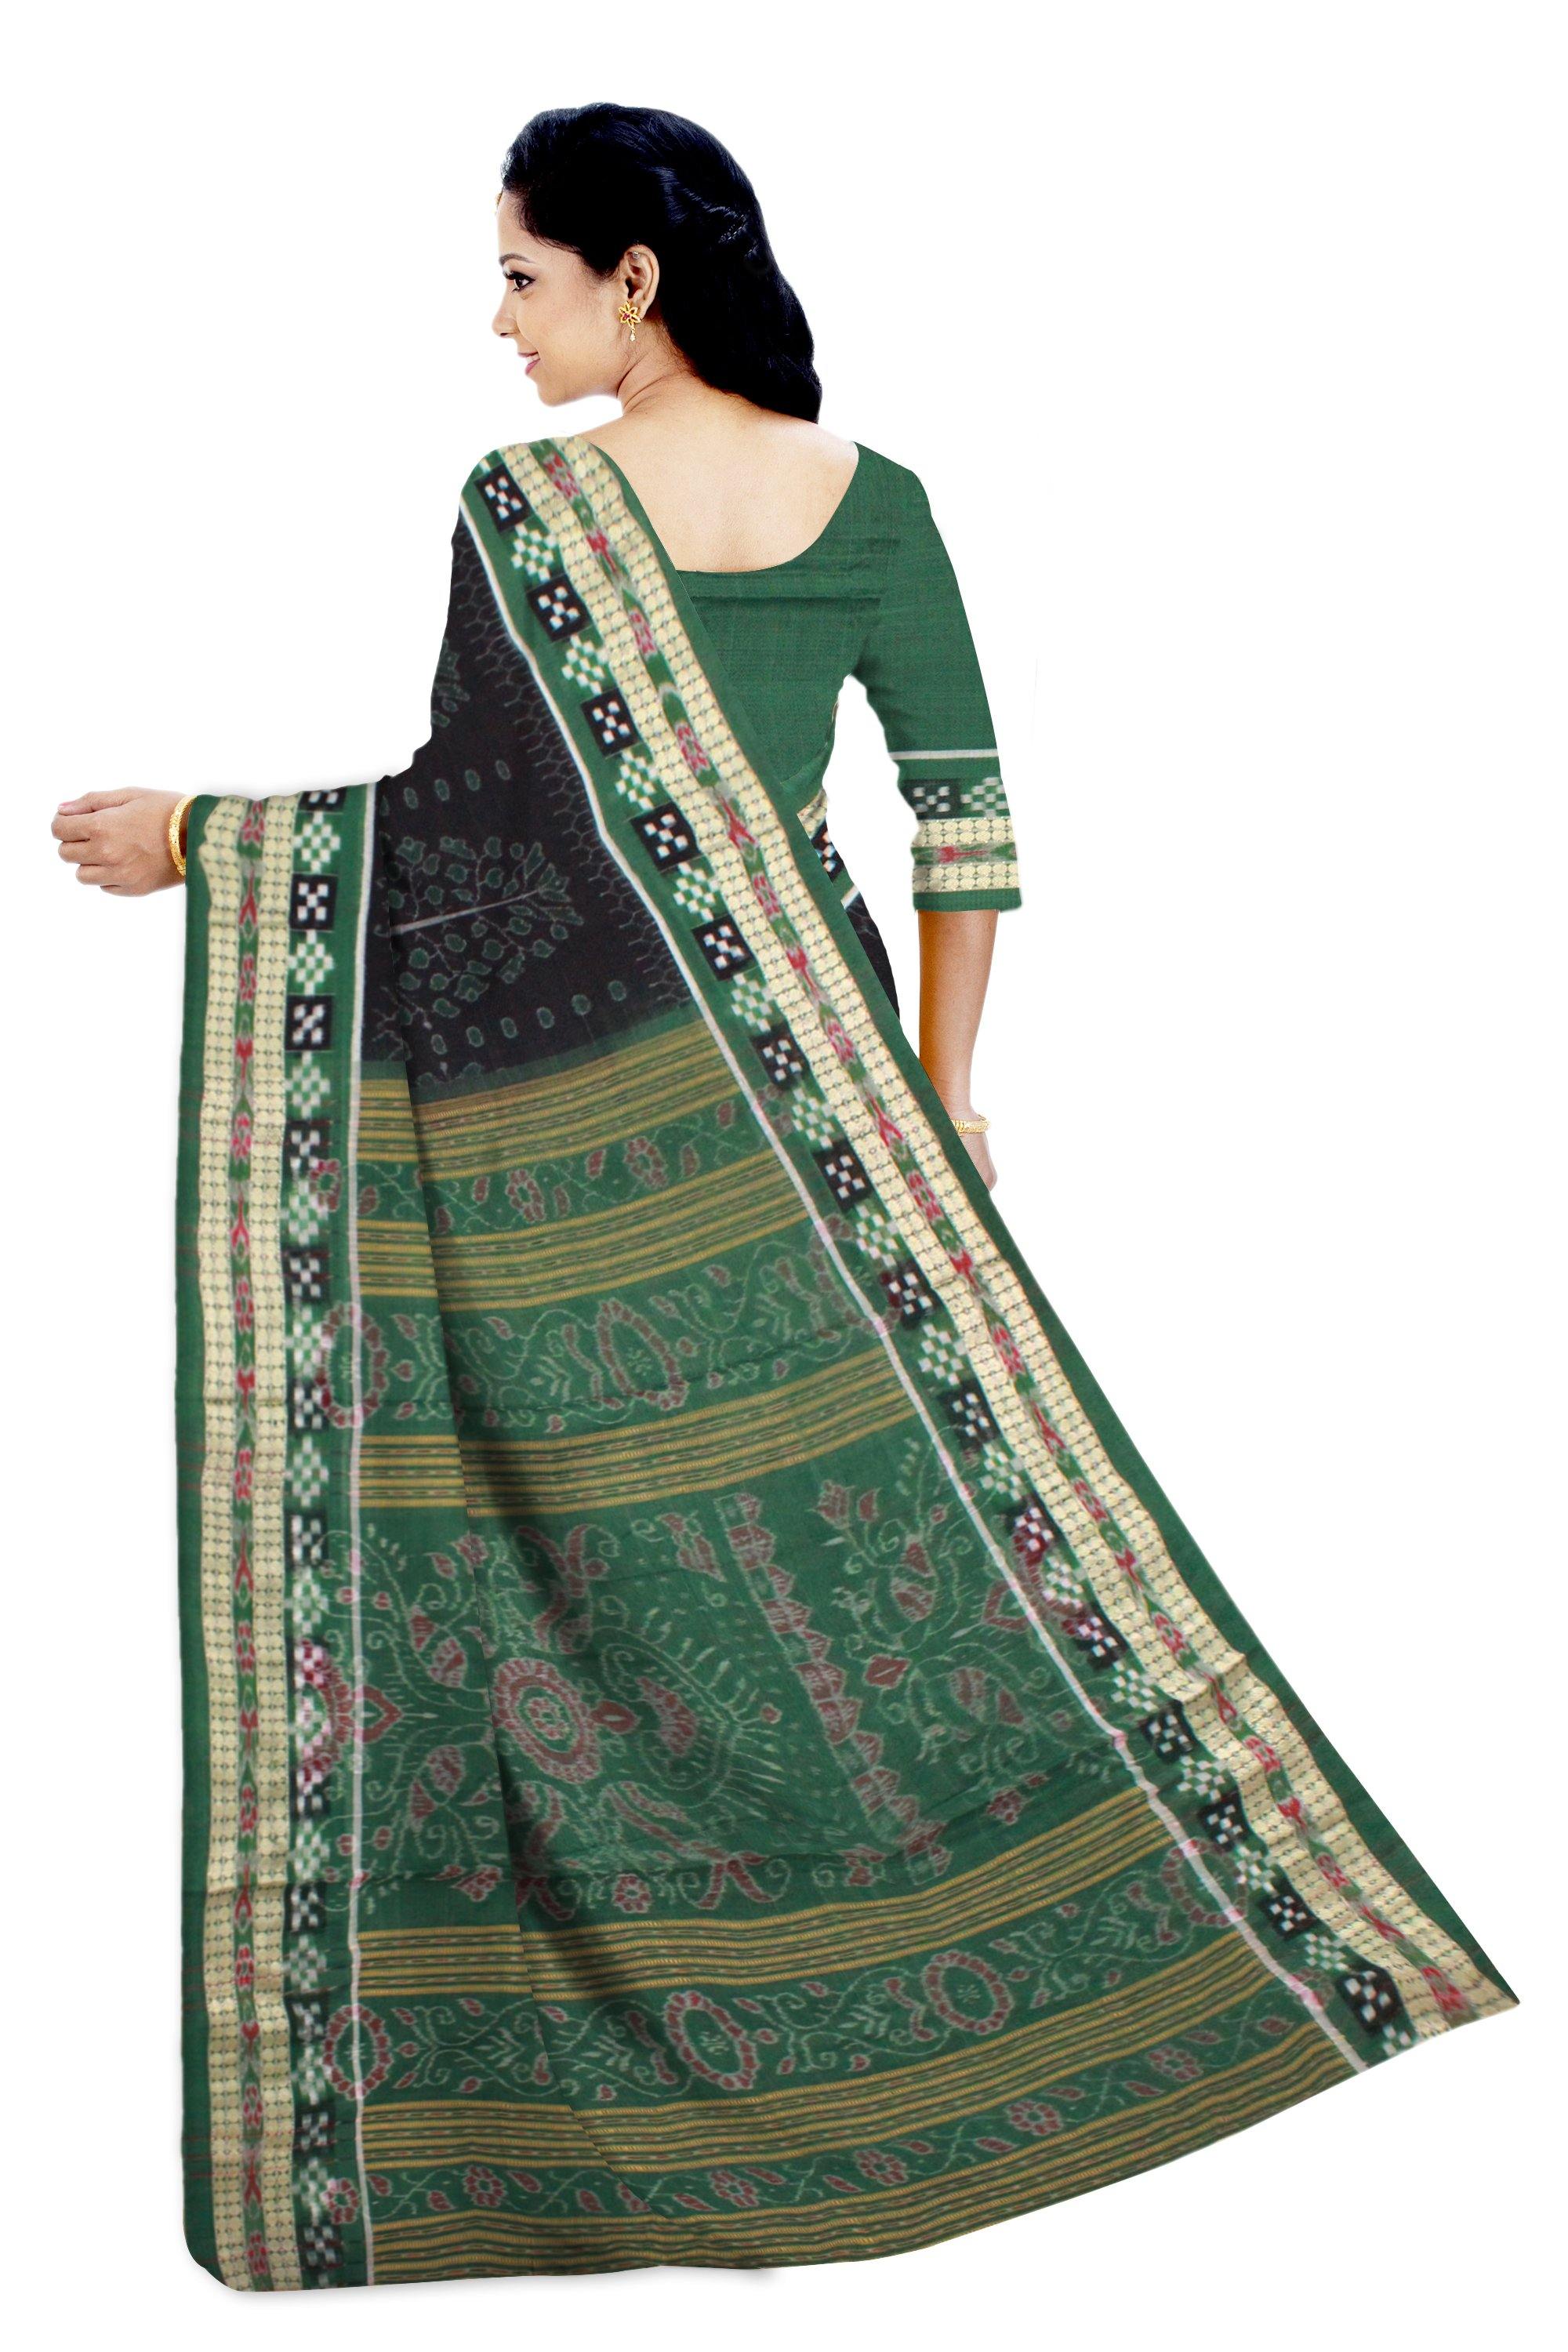 Sambalpuri Flora design Pure cotton saree in Black & Green with Pasapali border, with blouse piece - Koshali Arts & Crafts Enterprise